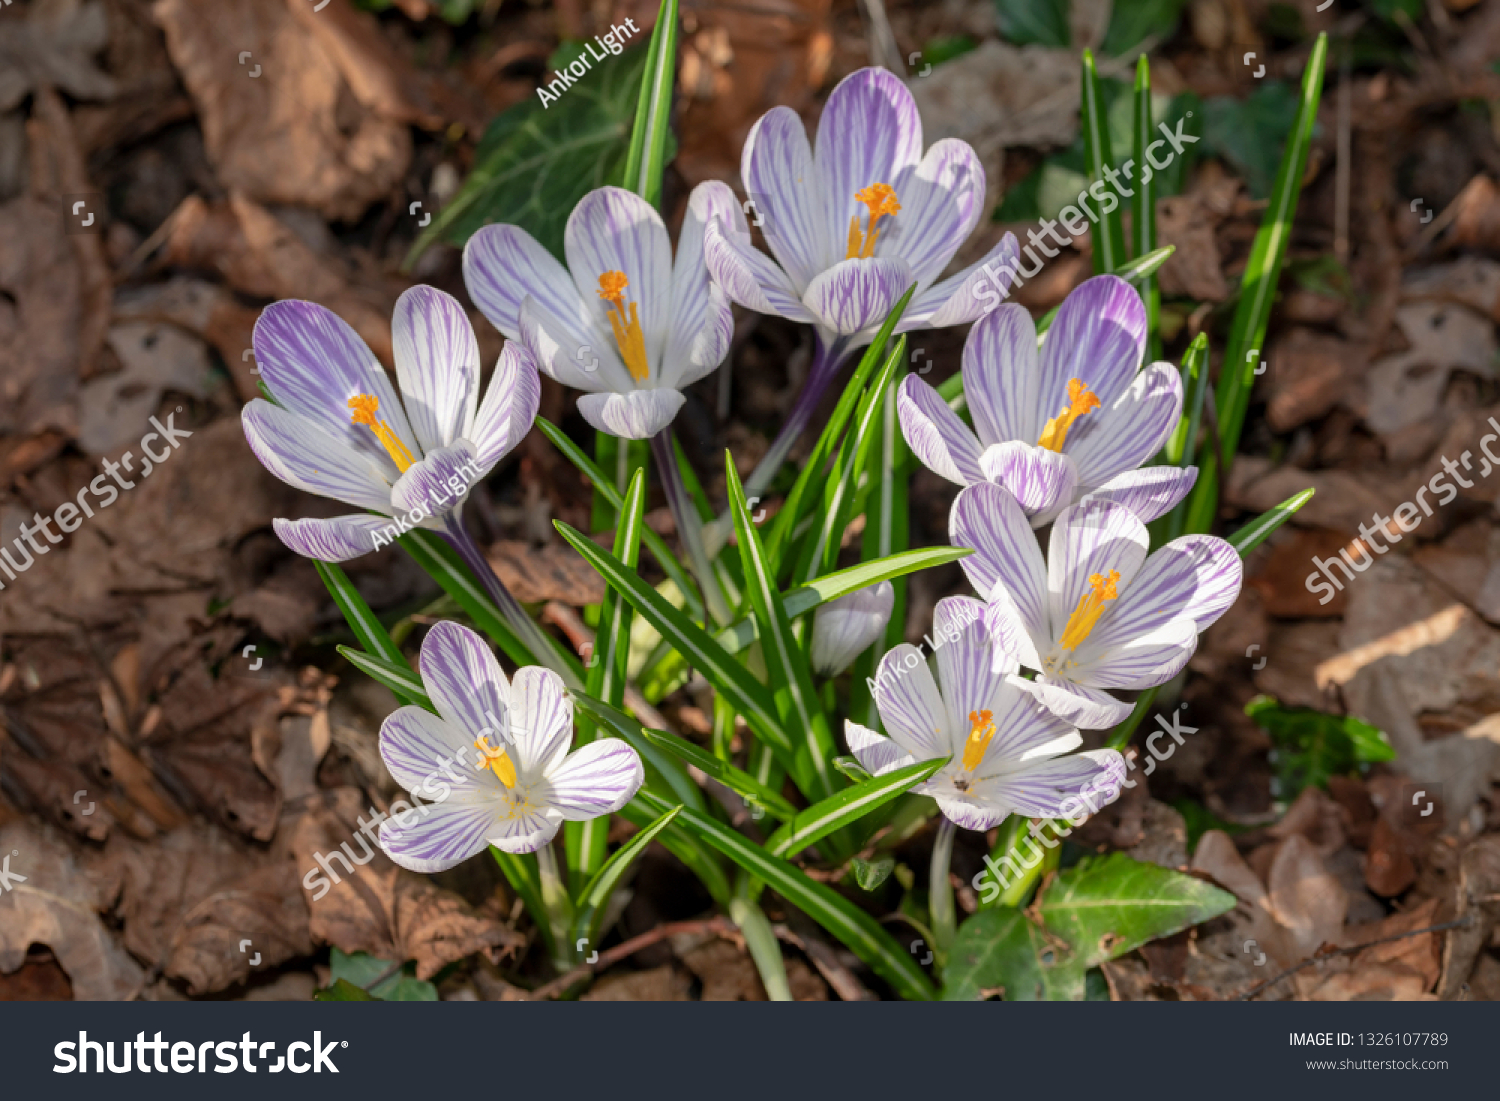 Closeup Bouauet White Purple Crocus Flower Stock Photo Edit Now 1326107789